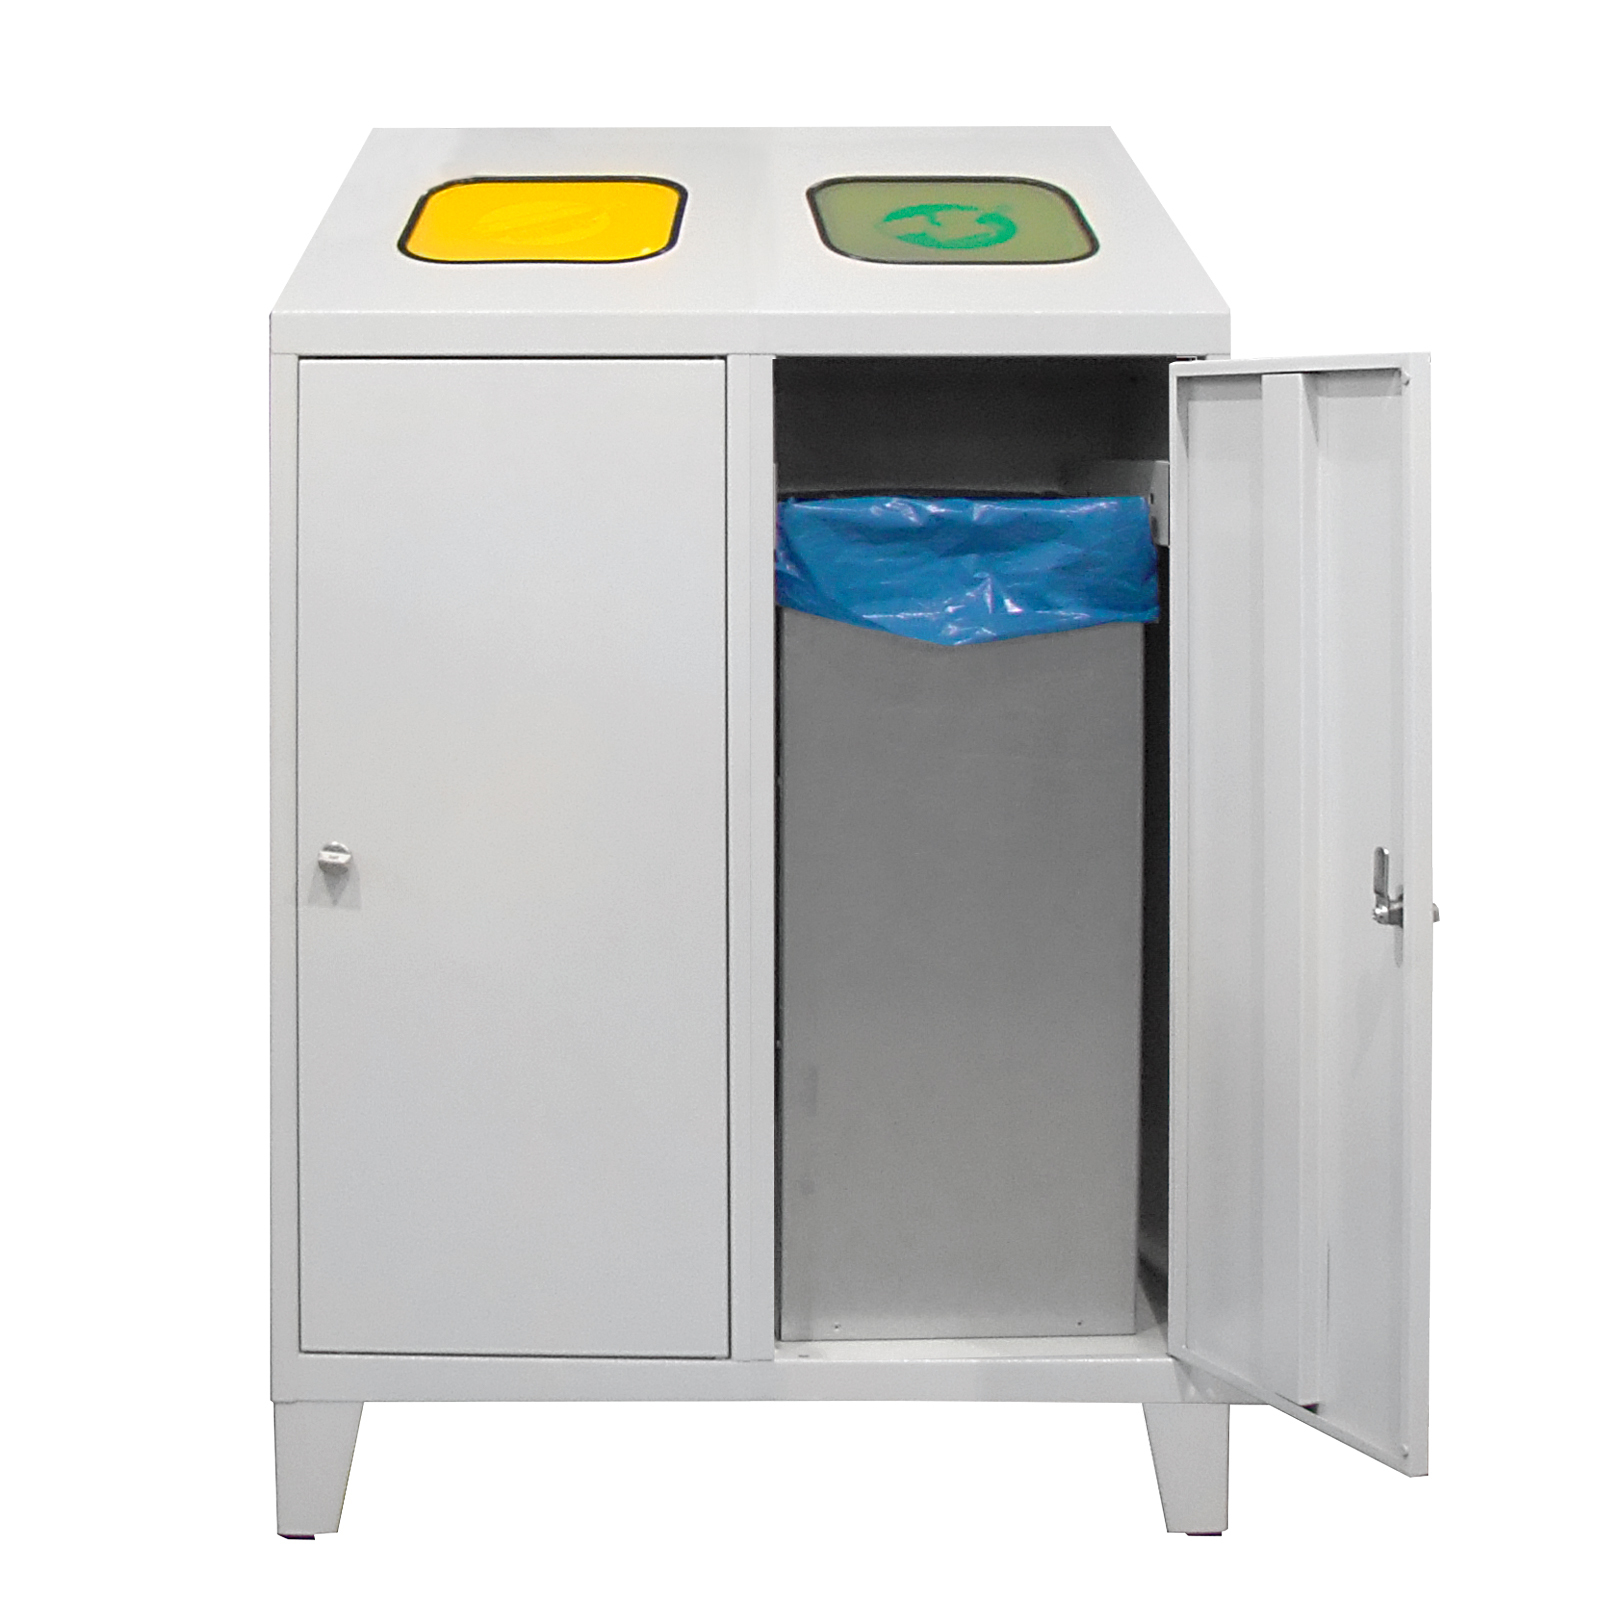 Recycling-Abfallsammler mit verzinktem Behälter Duo | HxBxT 122x80x45cm | 2x 120 Liter | Lichtgrau